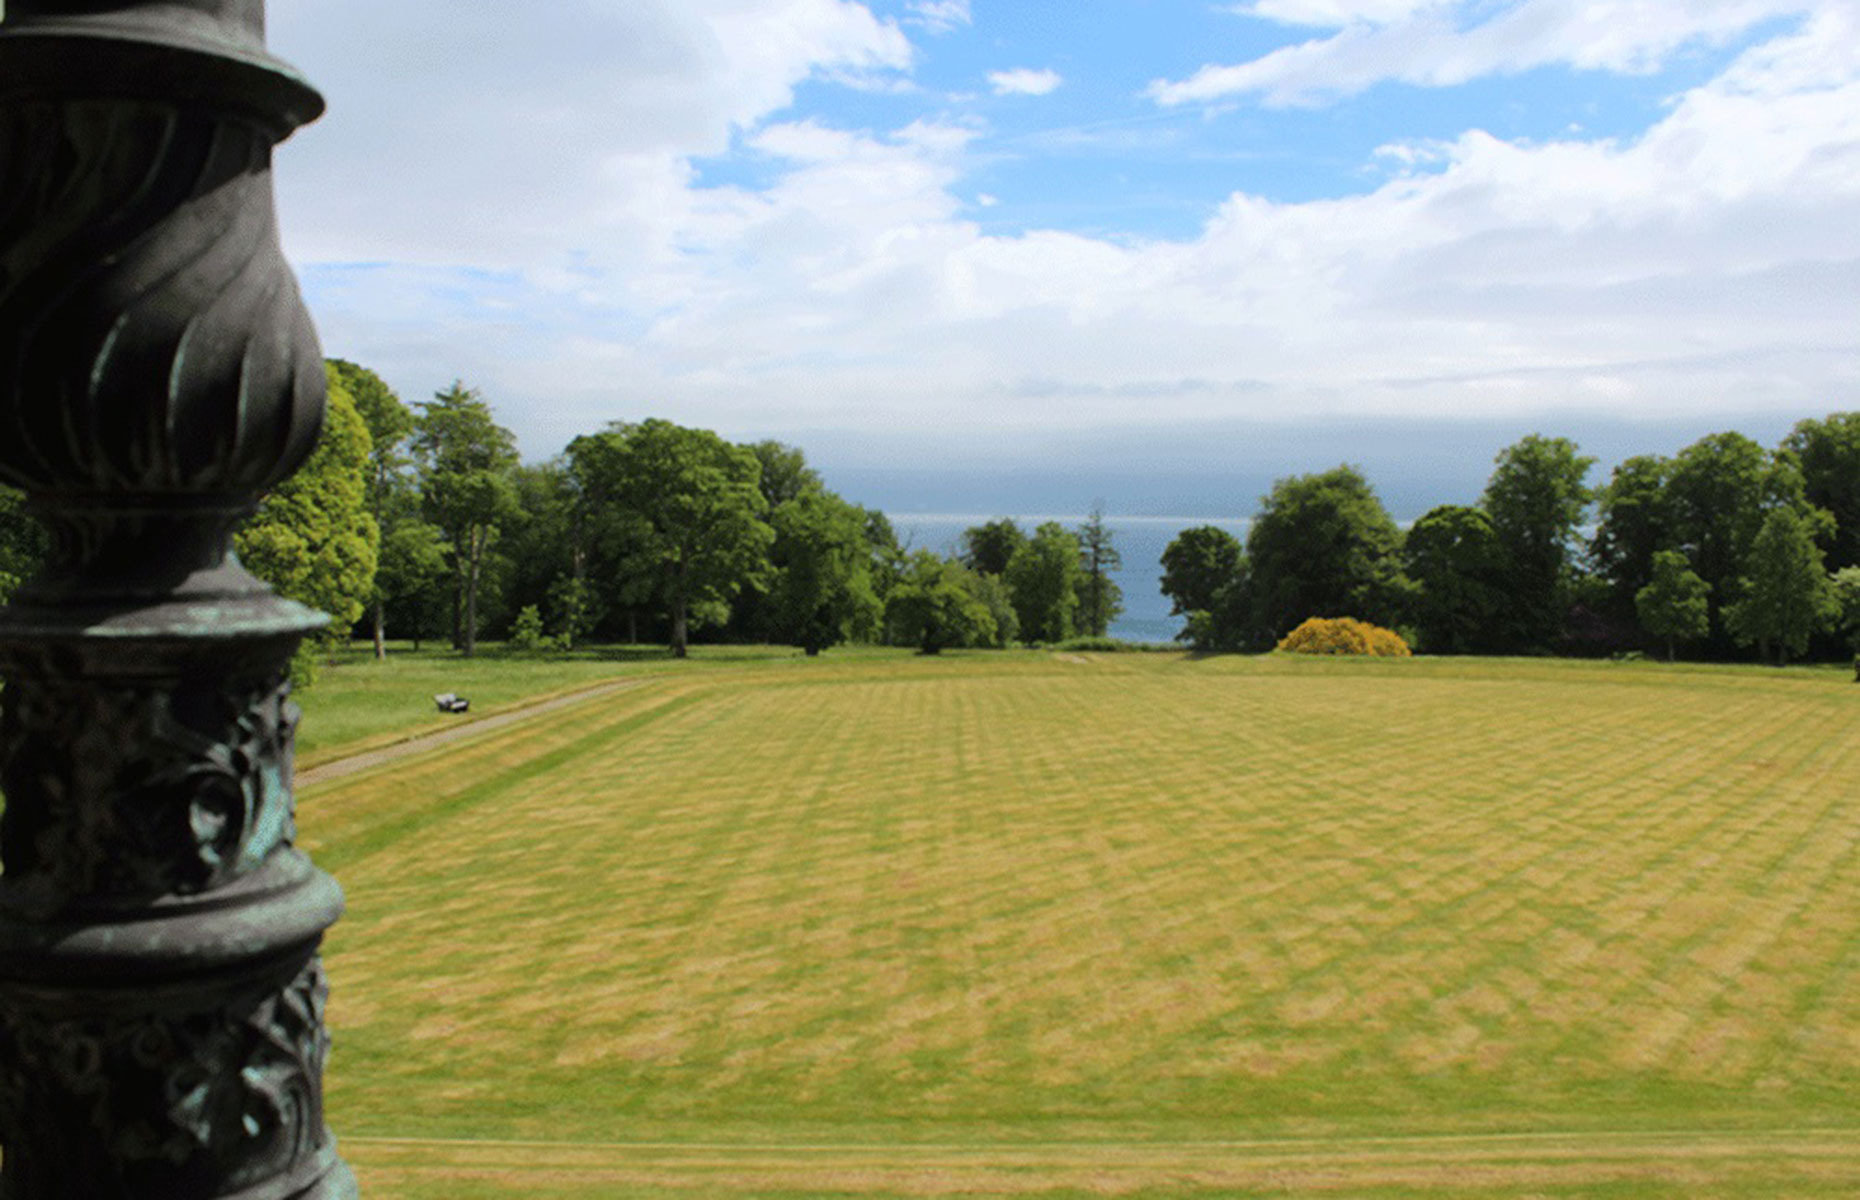 Mount Stuart front lawn on the Isle of Bute, Scotland (Image: Sally Coffey)